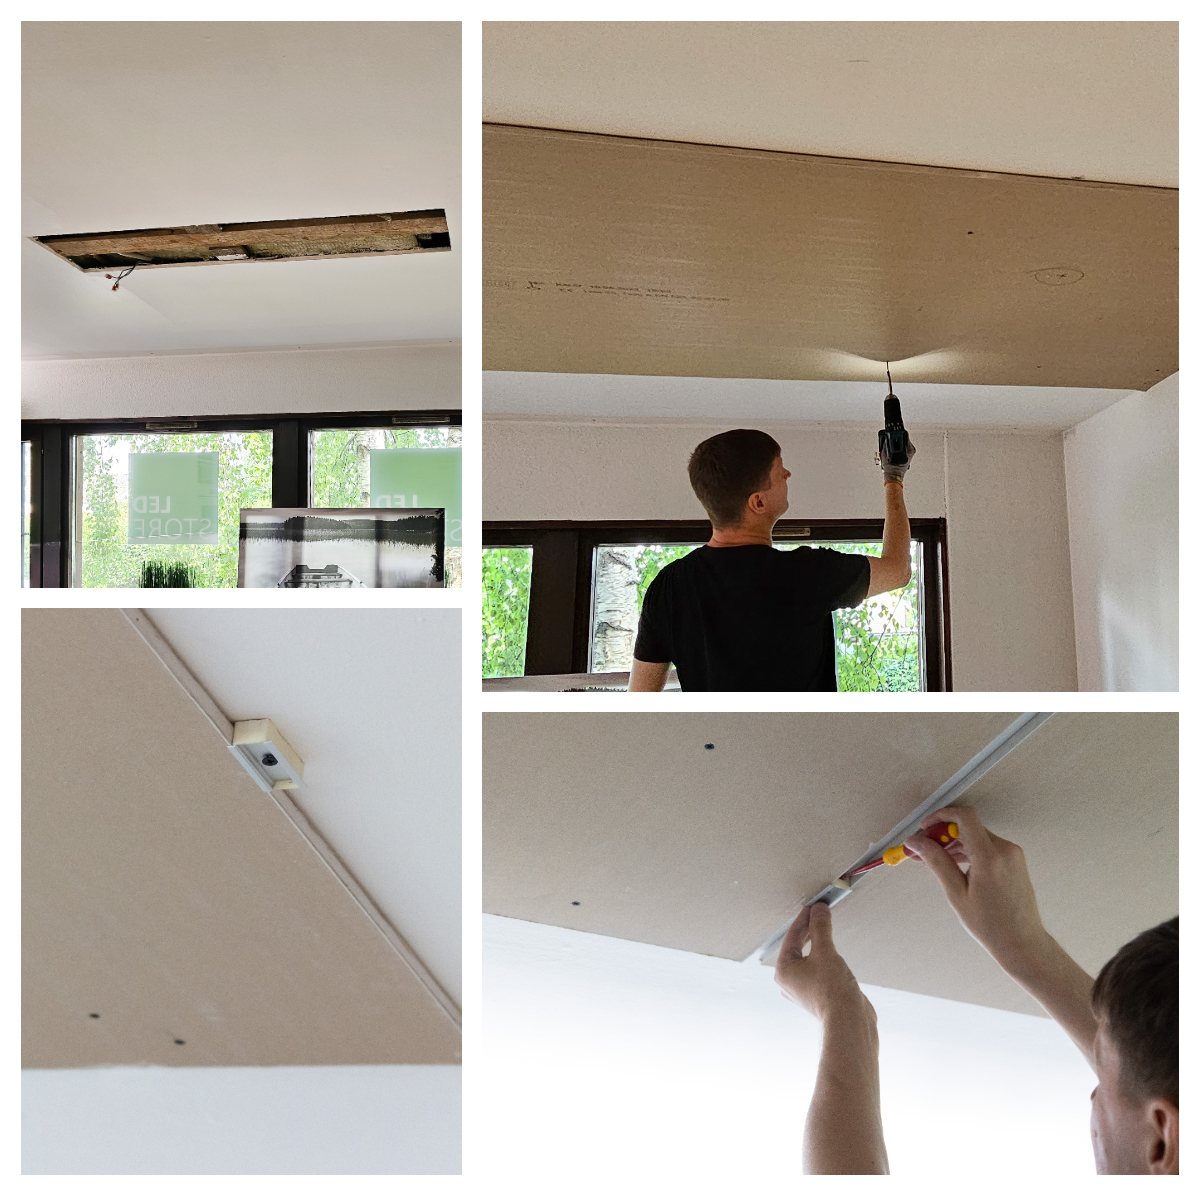 Kitchen ceiling renovation 1 collage 4 photos ledstore.fi